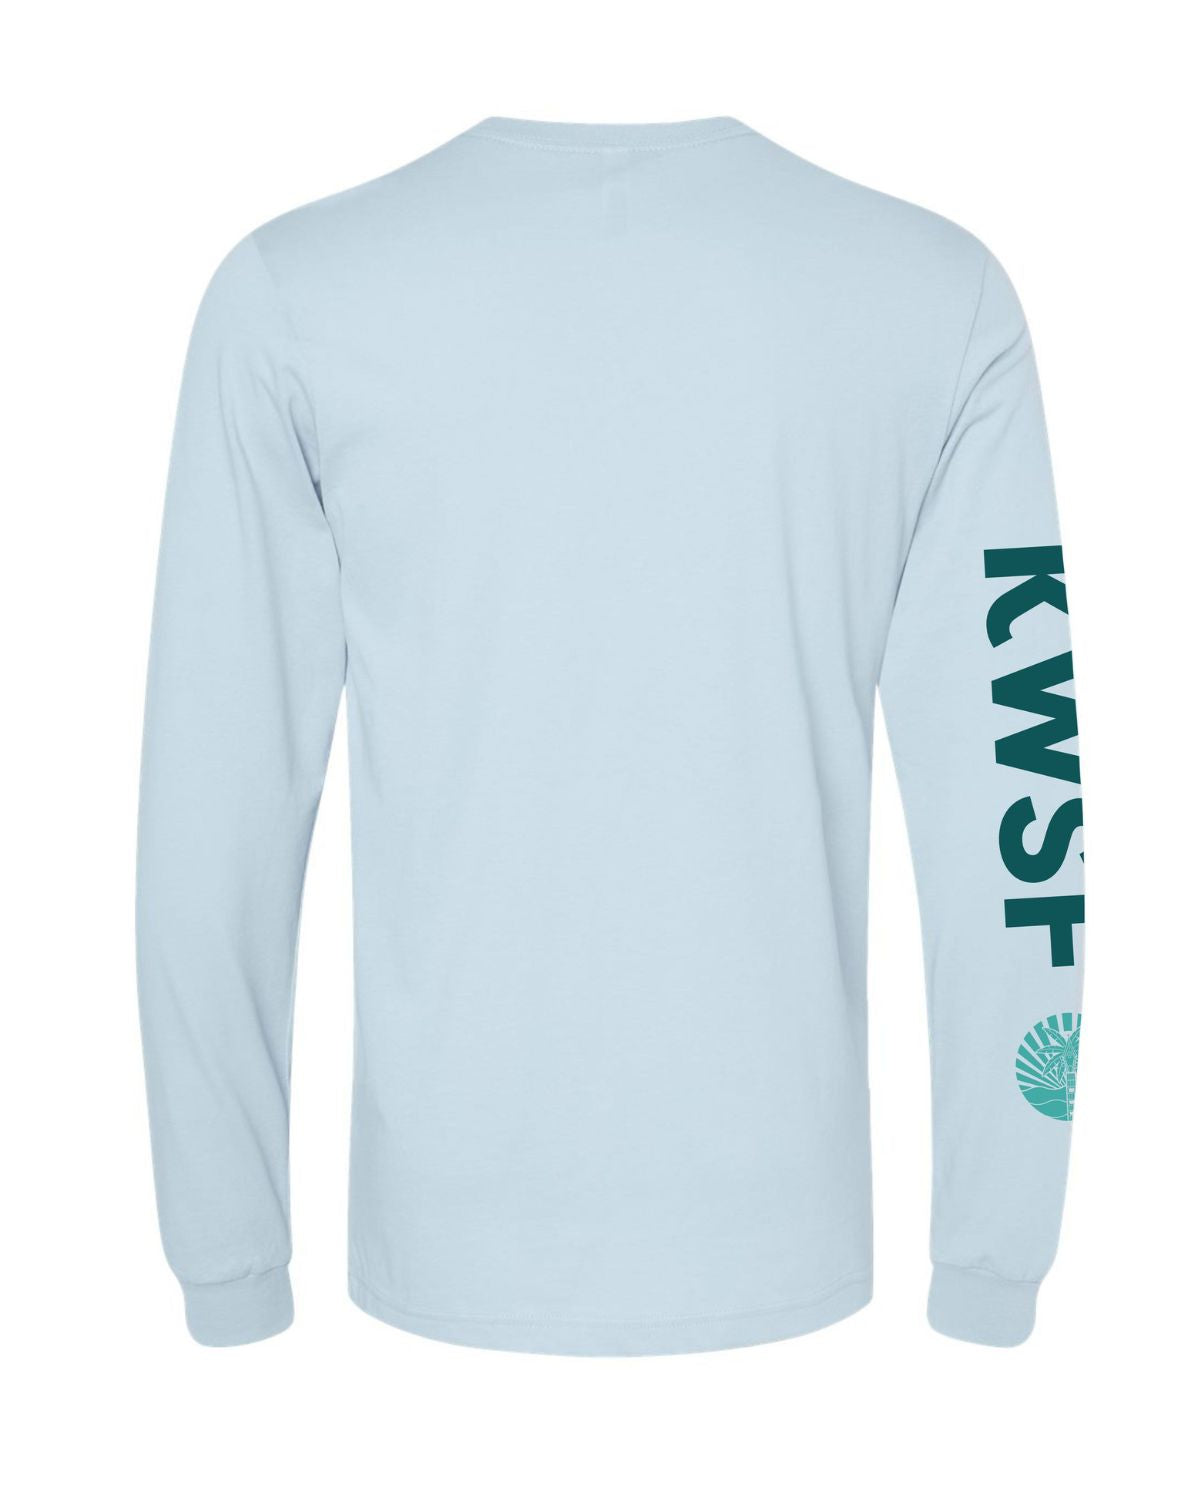 KWSF Long Sleeve Performance Shirt